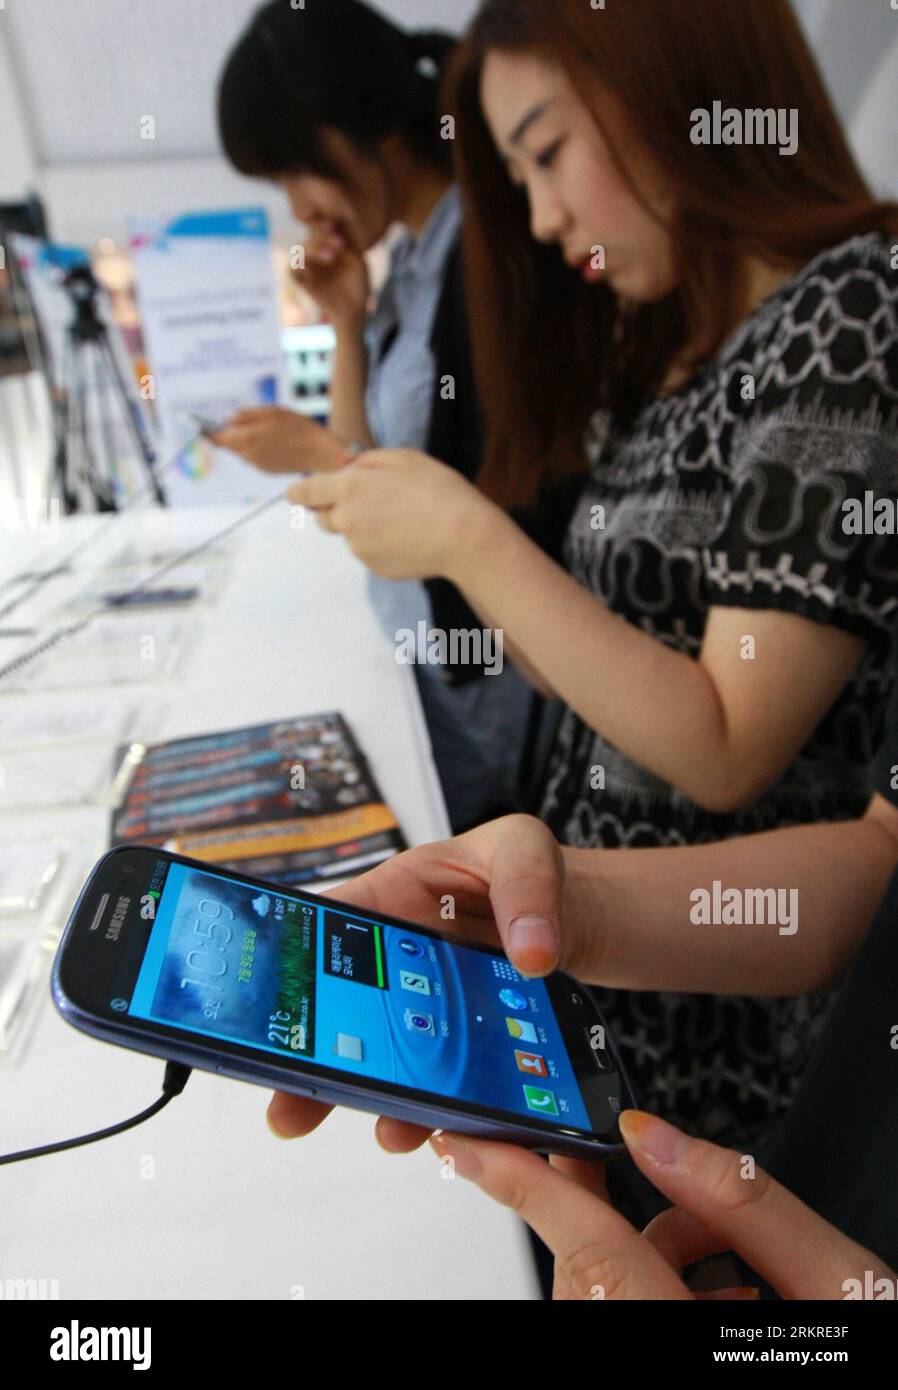 Bildnummer: 58212839  Datum: 09.07.2012  Copyright: imago/Xinhua (120709) -- SEOUL, July 9, 2012 (Xinhua) -- try out Samsung s new smartphone Galaxy S III in Seoul, South Korea, July 9, 2012. The smartphone went on sale on Monday.(Xinhua/Park Jin-hee) SOUTH KOREA-SEOUL-SAMSUNG-GALLAXY S III PUBLICATIONxNOTxINxCHN Wirtschaft Verkaufsstart Smartphone S 3 S3 xjh x0x premiumd Highlight 2012 hoch     58212839 Date 09 07 2012 Copyright Imago XINHUA  Seoul July 9 2012 XINHUA Try out Samsung S New Smartphone Galaxy S III in Seoul South Korea July 9 2012 The Smartphone Went ON Sale ON Monday XINHUA Par Stock Photo